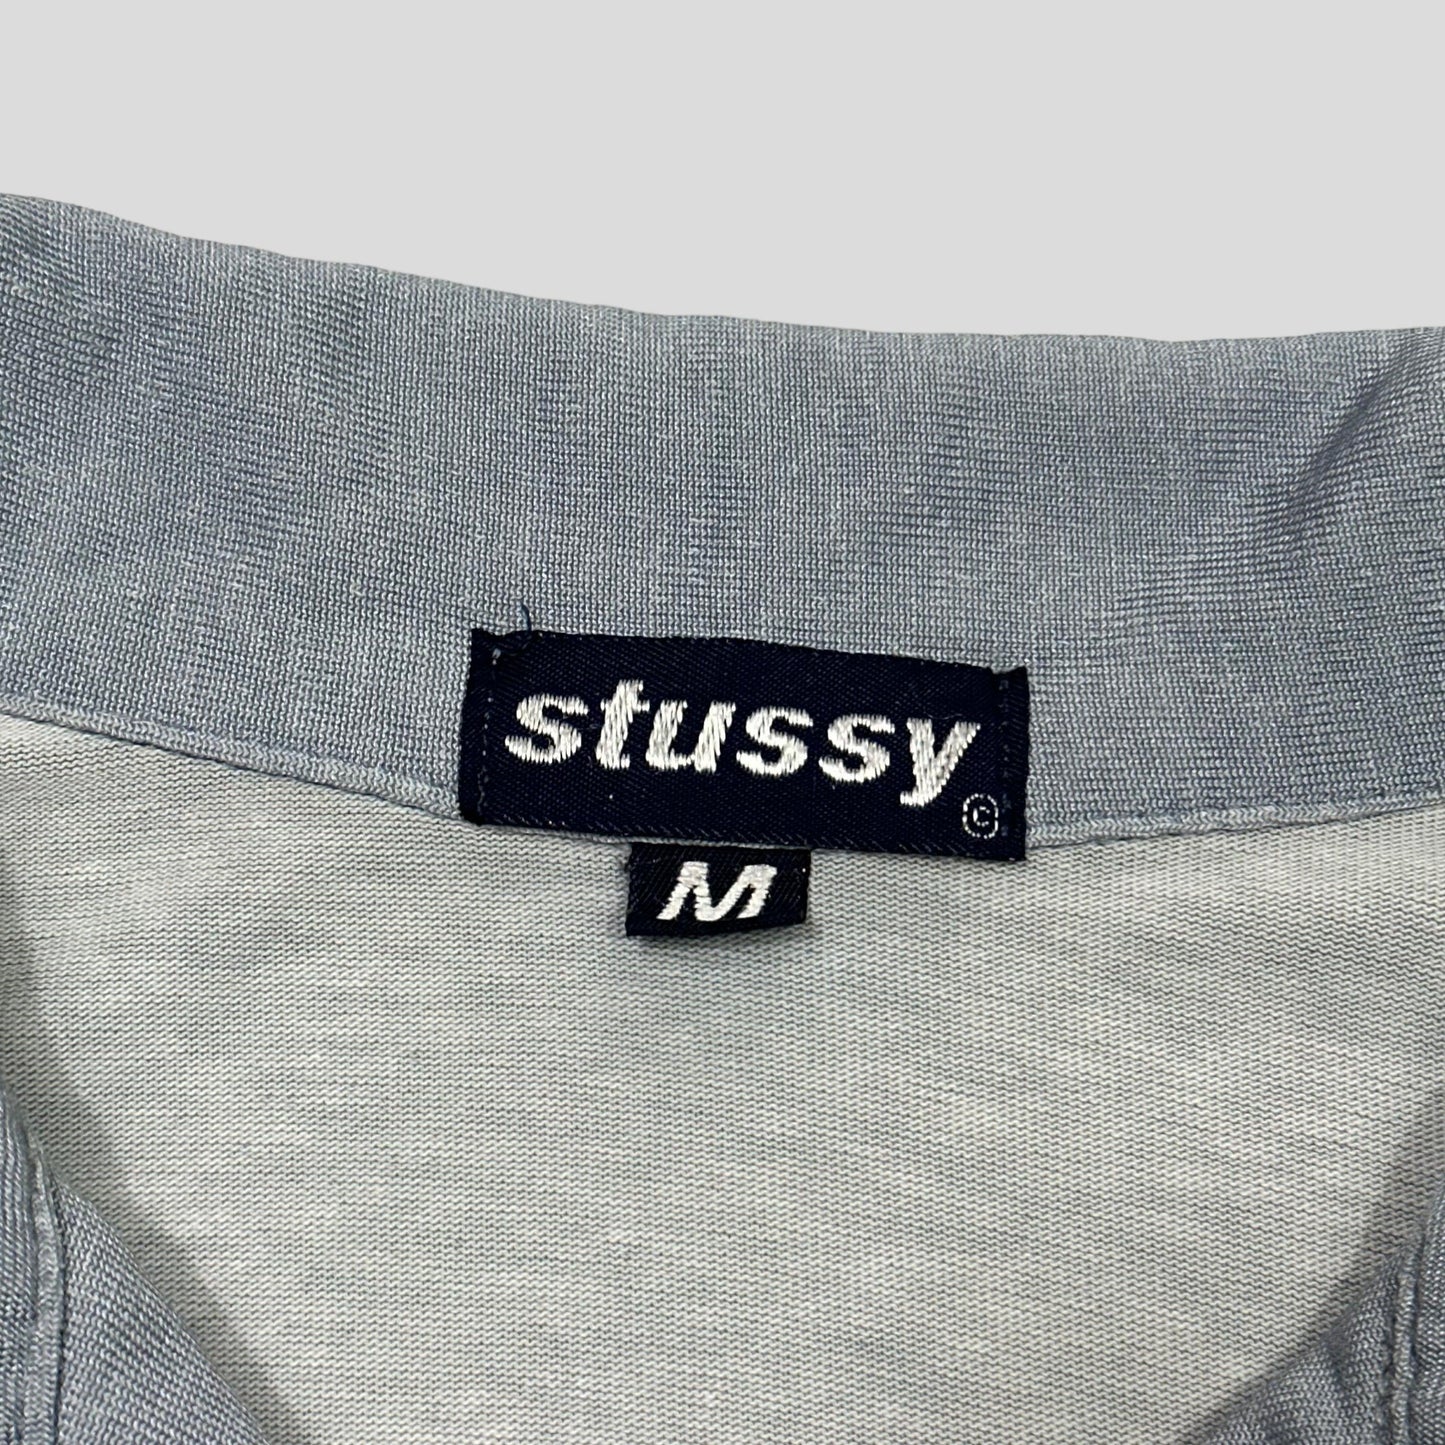 Stussy 90’s ‘Silk’ Open Collar Shirt - M - Known Source